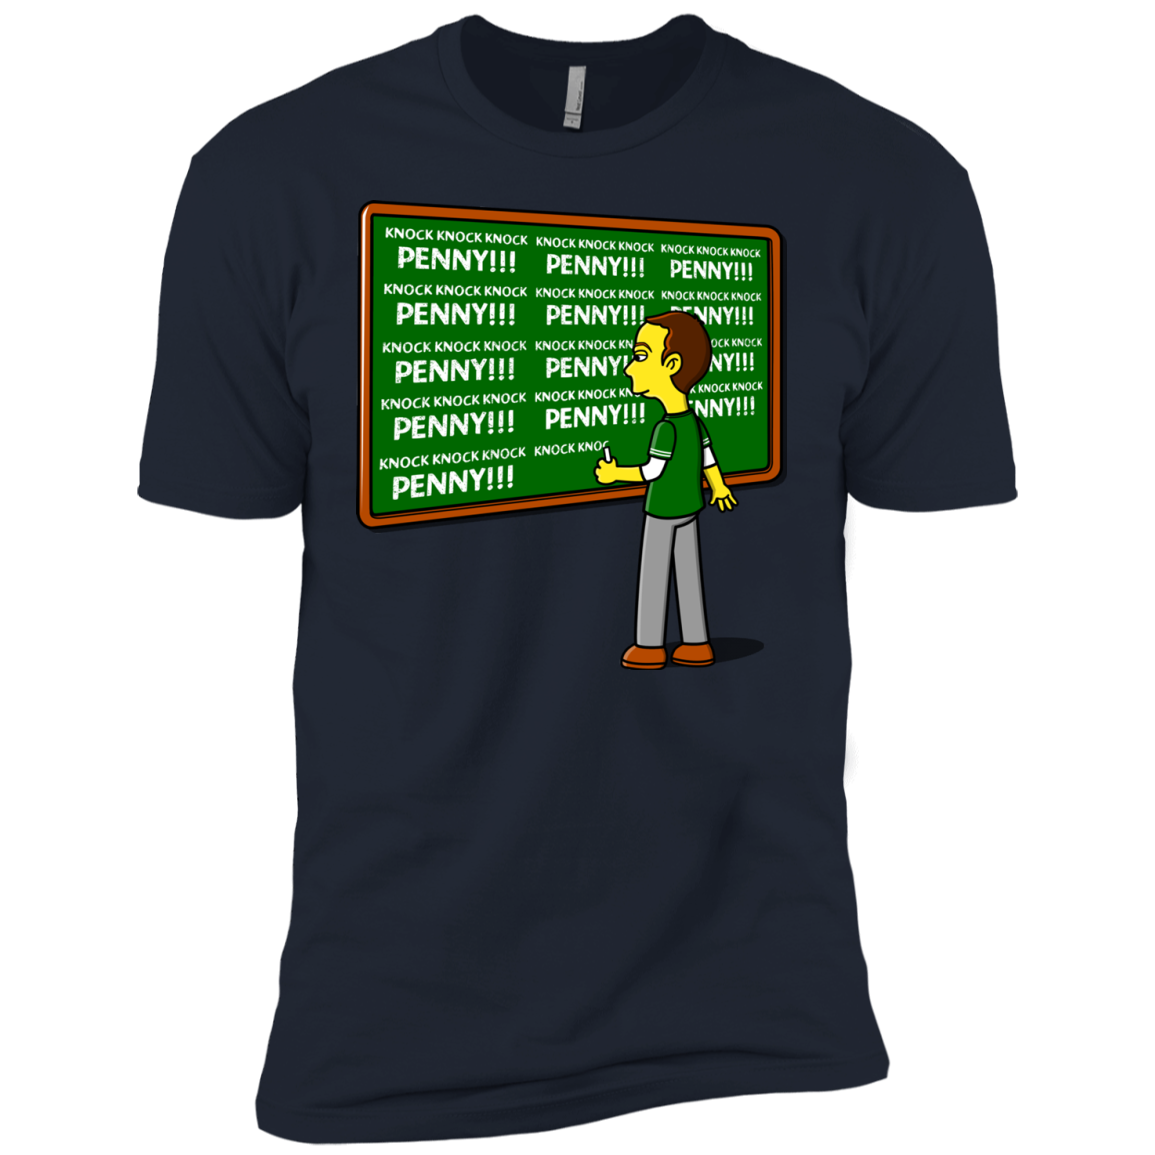 Blackboard Theory Boys Premium T-Shirt